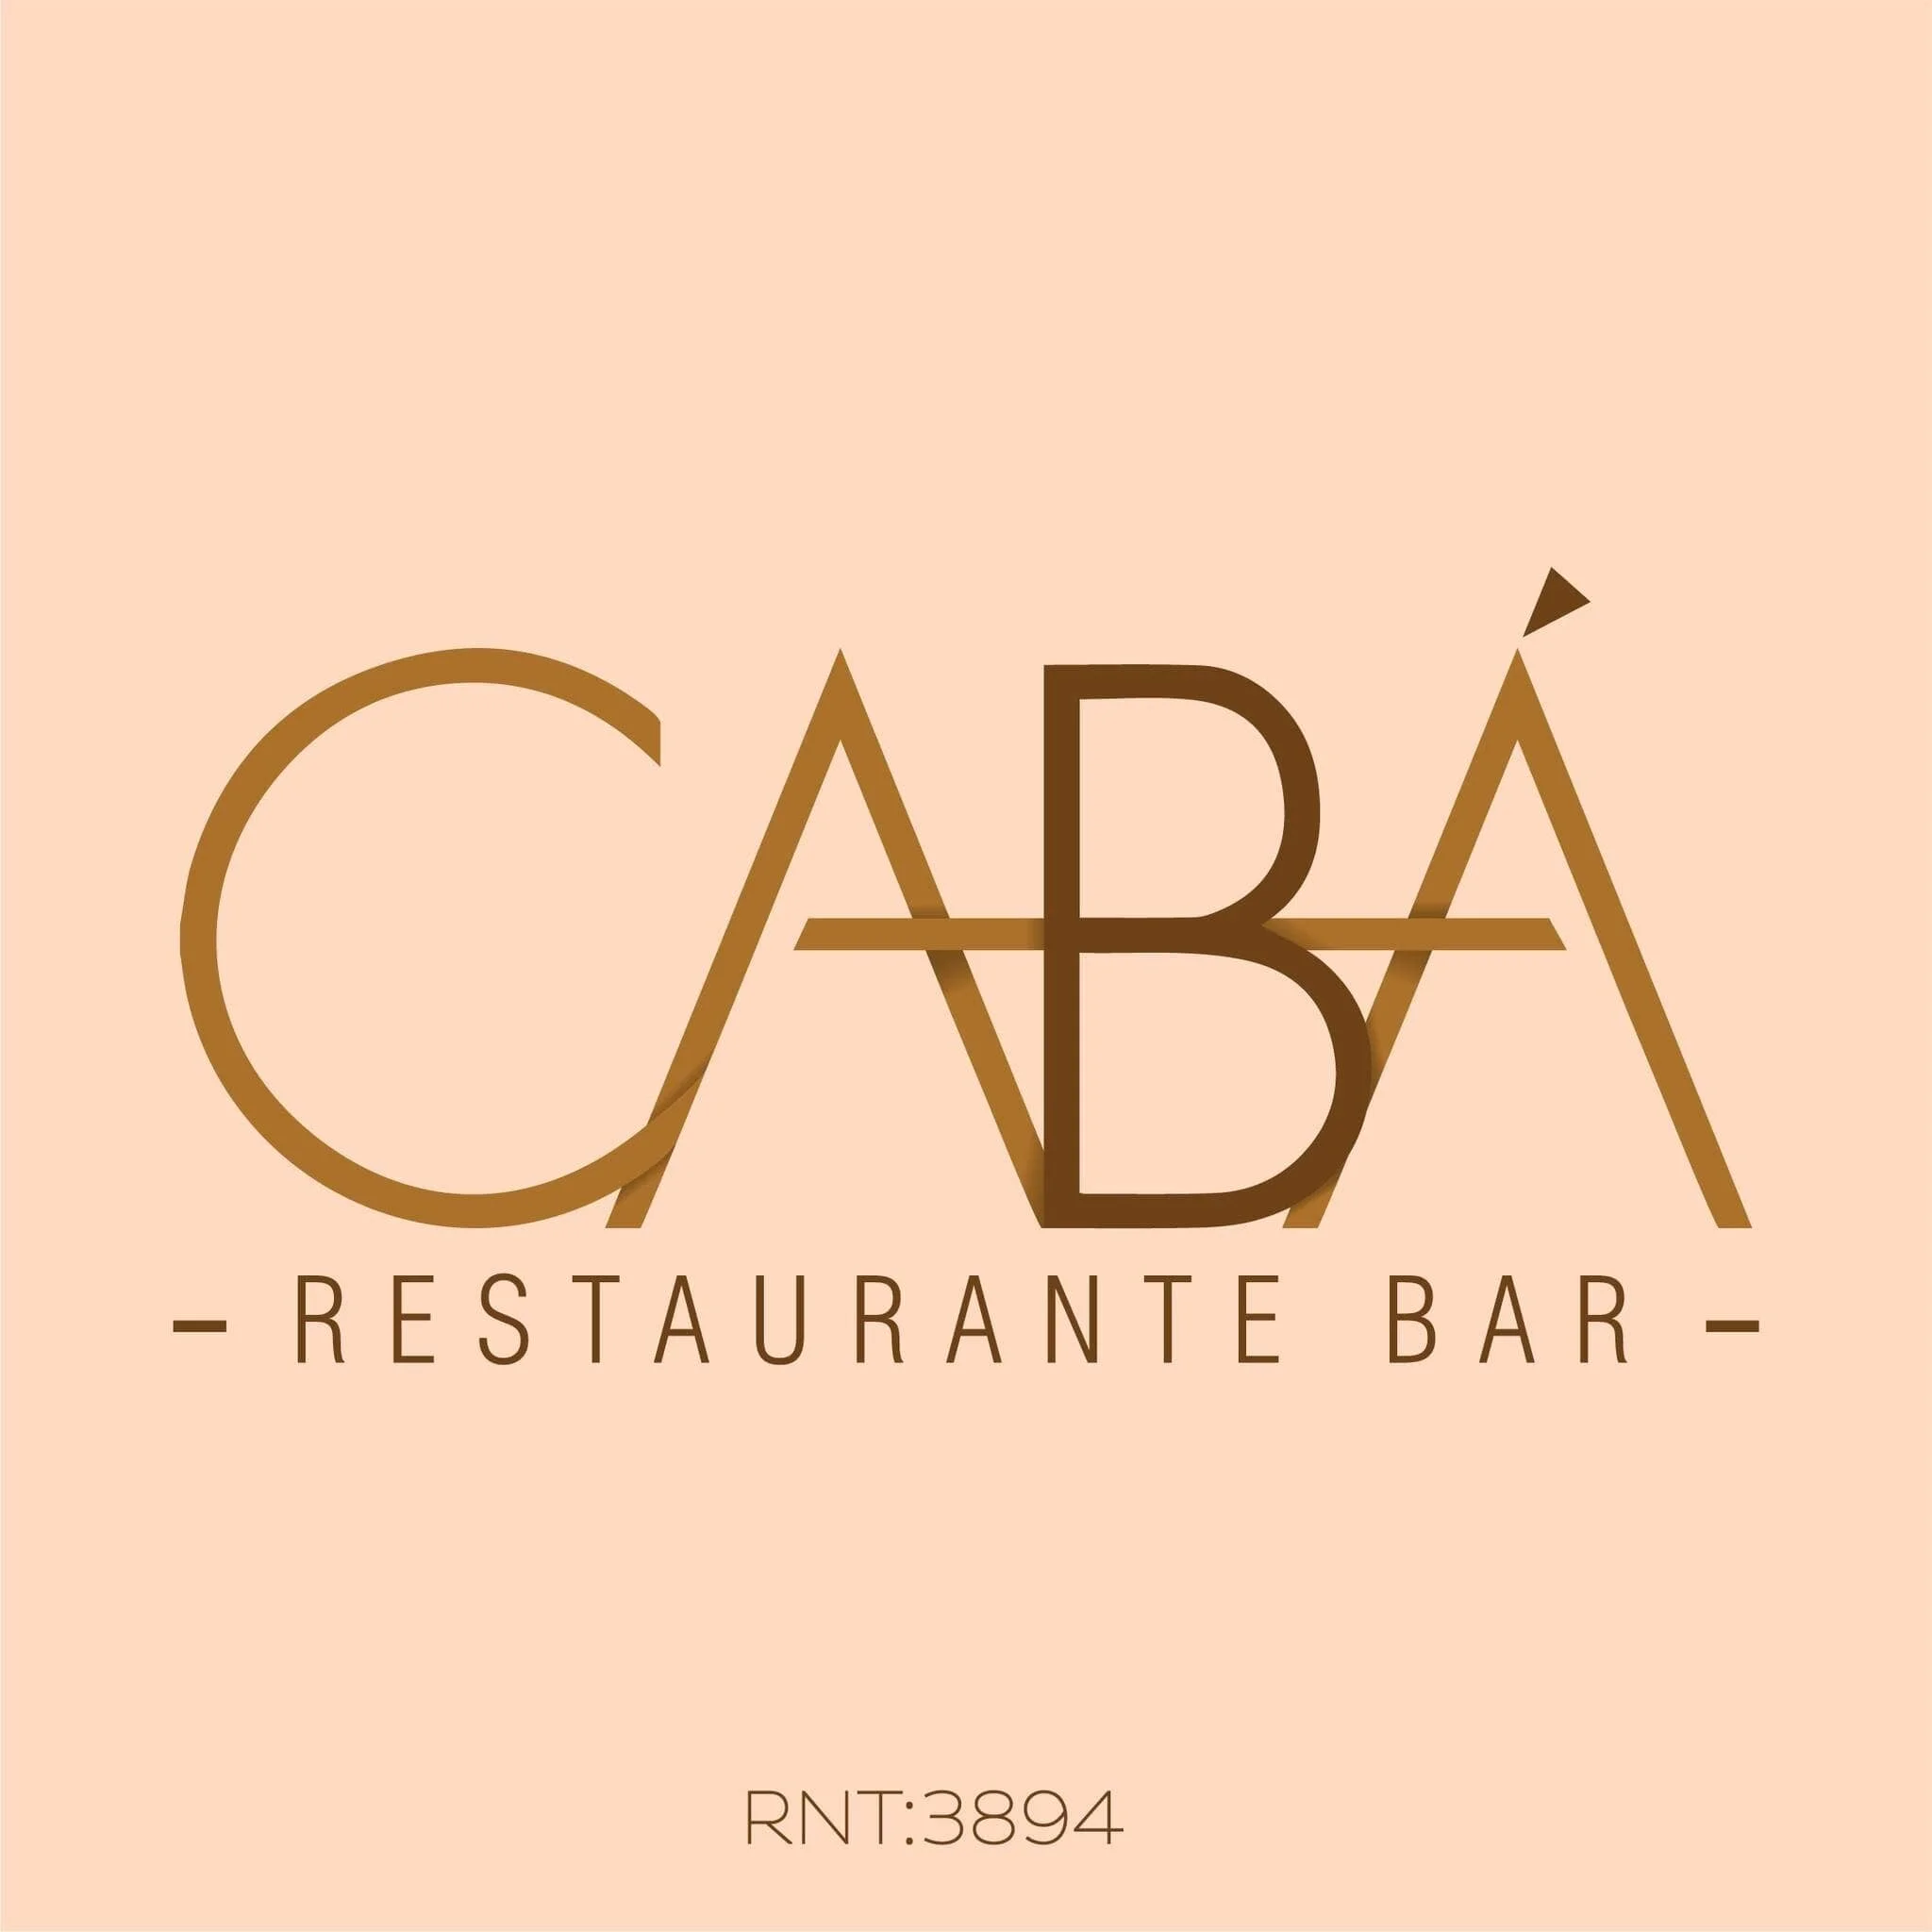 Restaurante Bar Cabá-6874